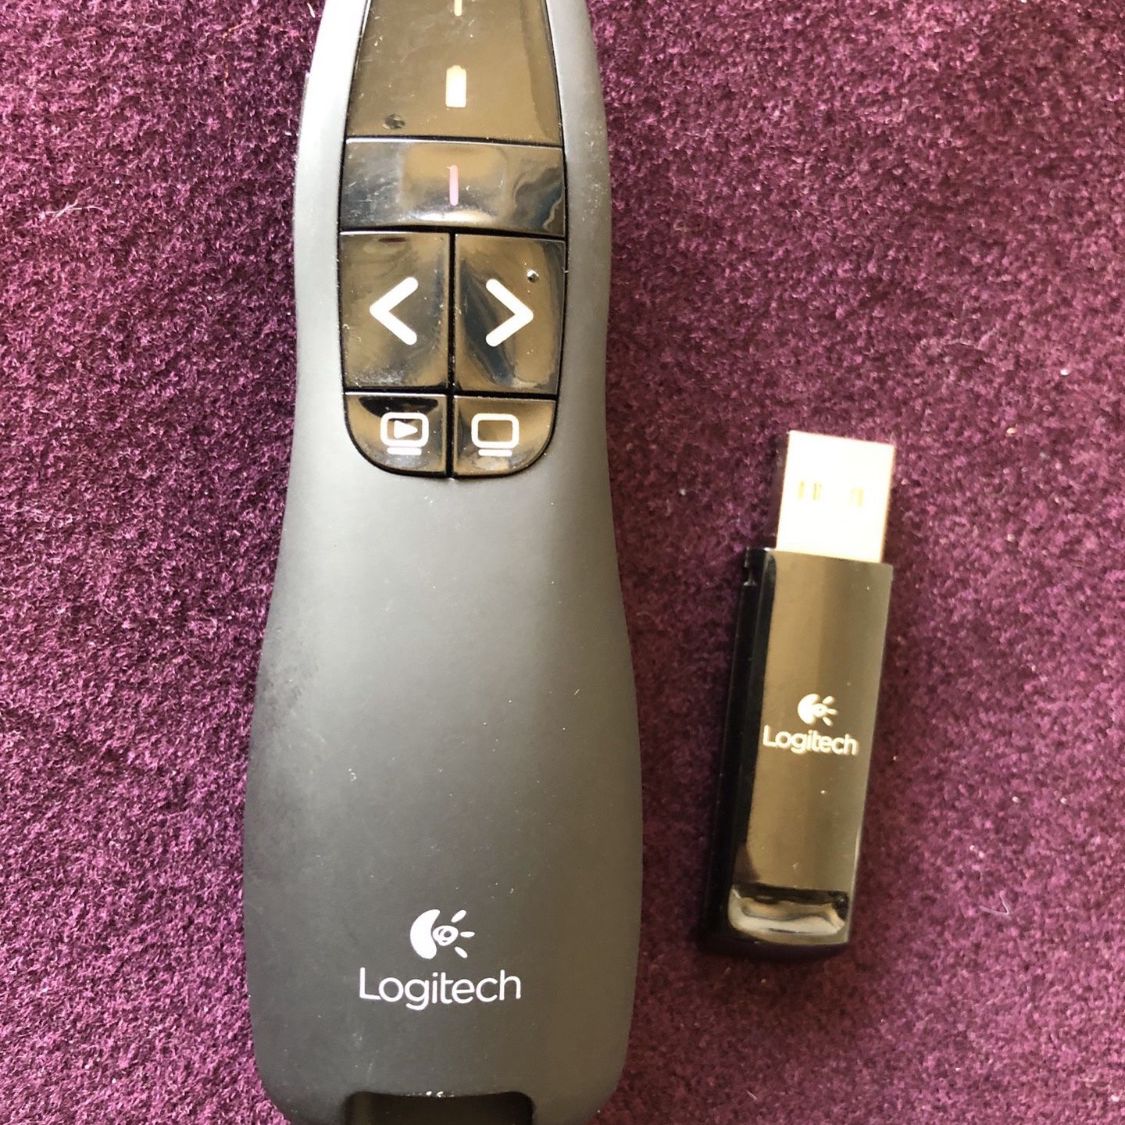 Logitech R400 Laser Presentation Remote for Sale in Angeles, CA - OfferUp